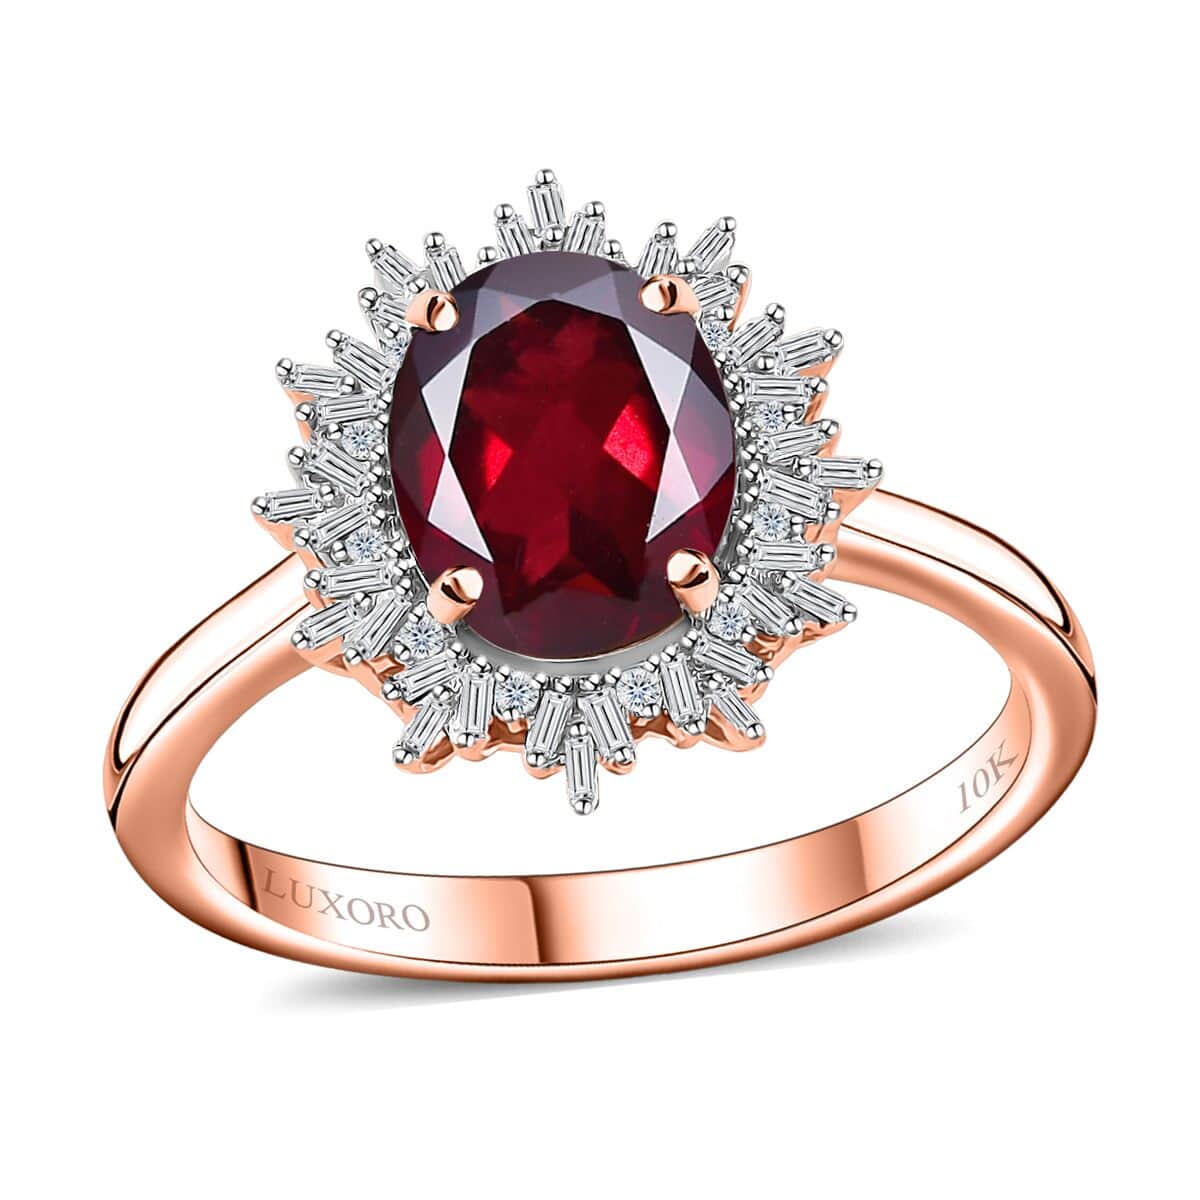 Luxoro 10K Rose Gold Premium Orissa Rhodolite Garnet and G-H I2 Diamond Ring (Size 9.0) 3.15 ctw image number 0